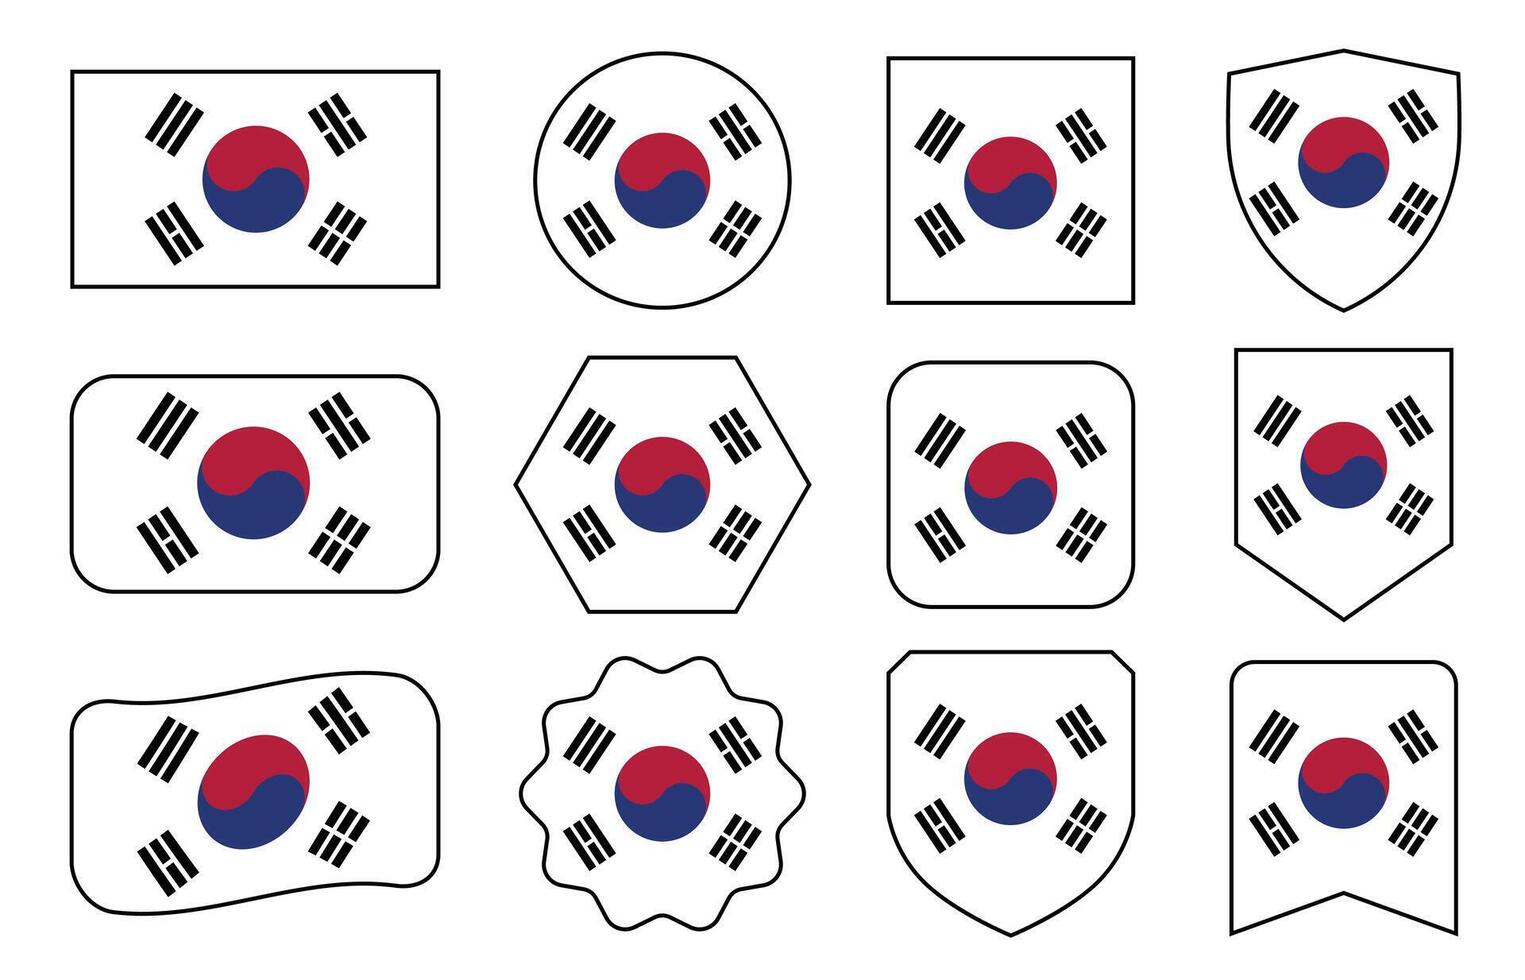 bandera de sur Corea en moderno resumen formas, ondulación, insignia, diseño modelo vector